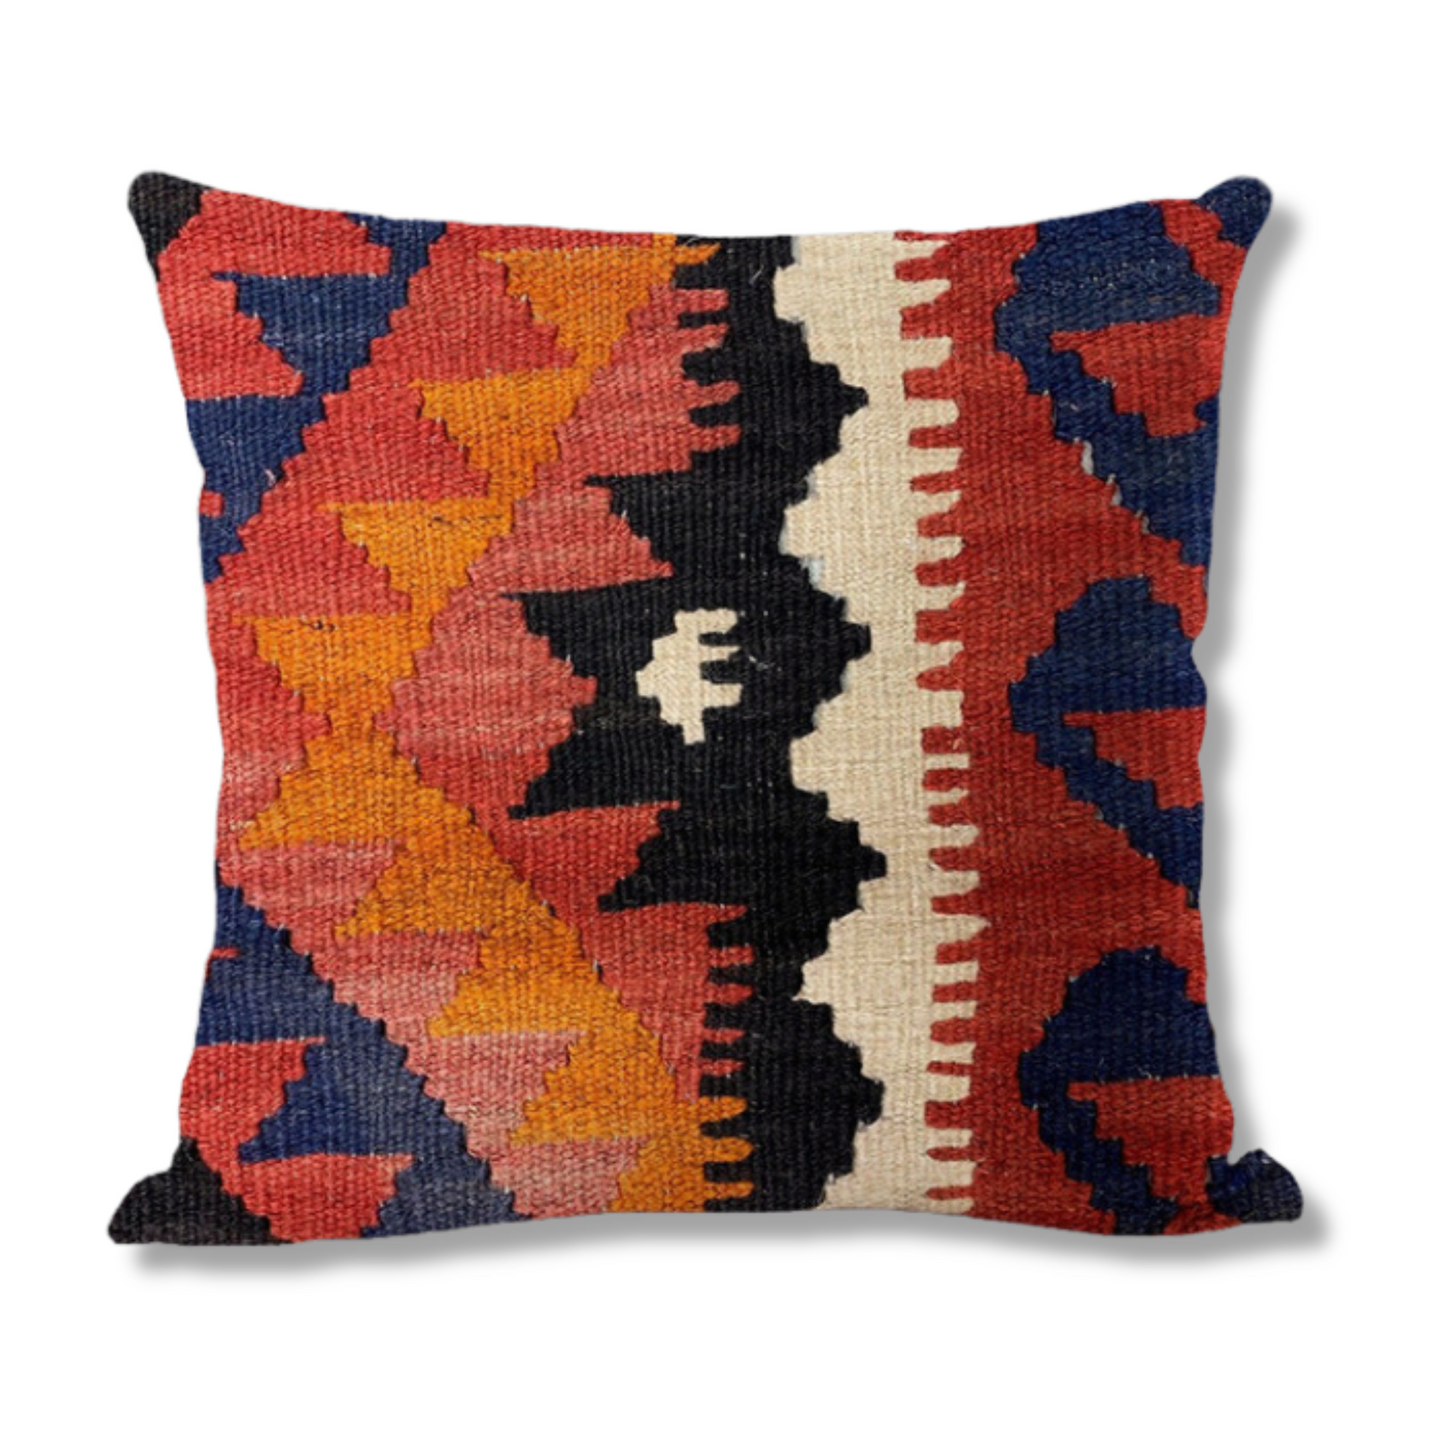 Vertical kilim design cushion cover in bohemian earthy colours